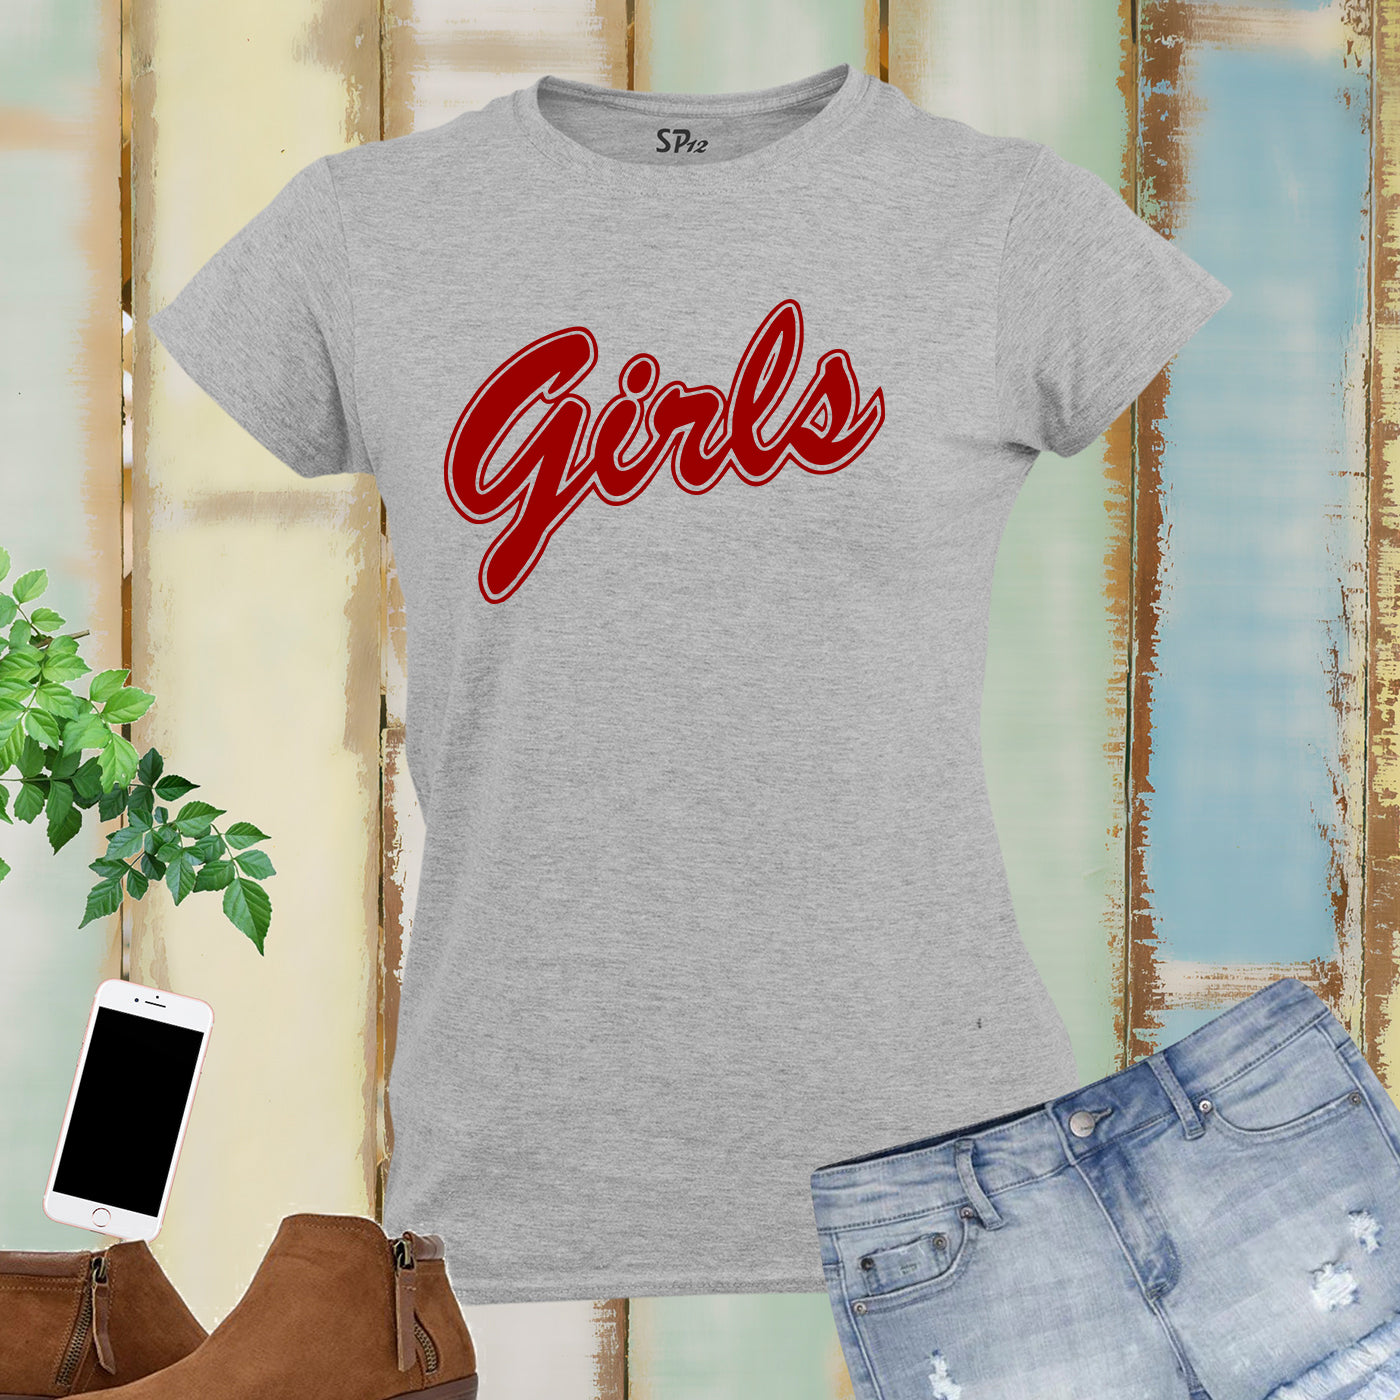 Girls T Shirt from Friends Tv Show Monic Rachel Tshirt Gift